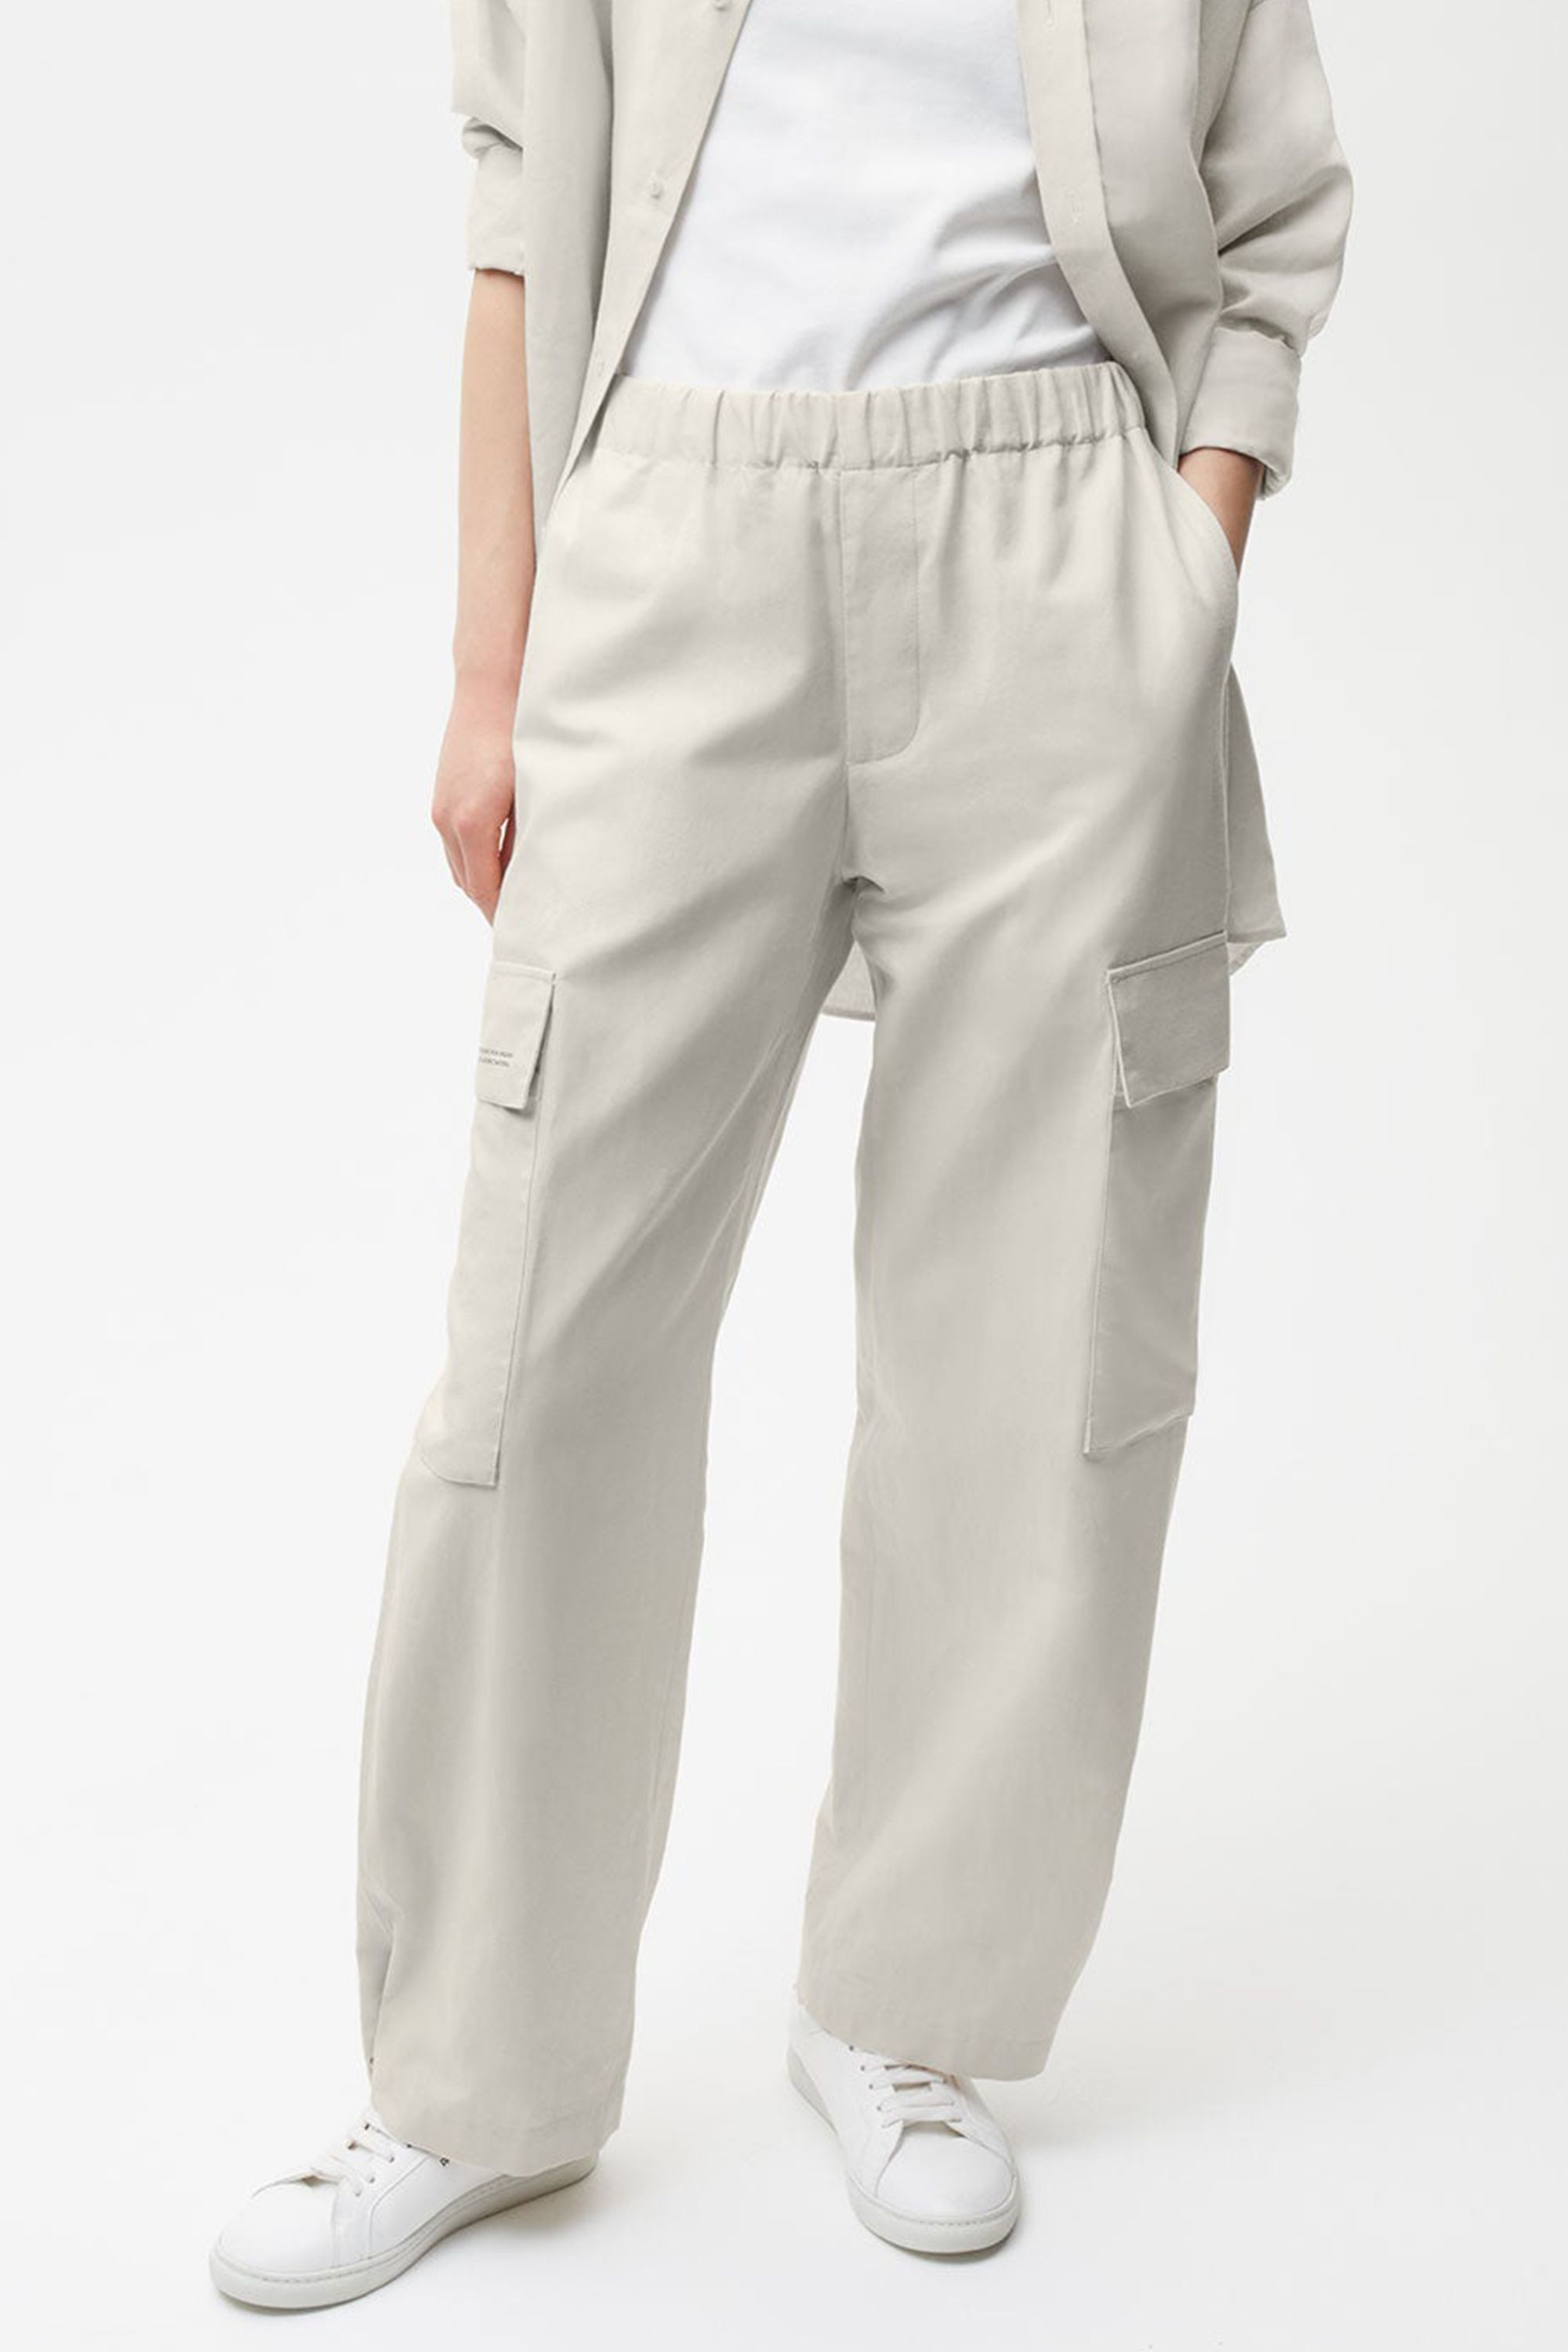 discount 95% WOMEN FASHION Trousers Print Zara Chino trouser Gray/White M 